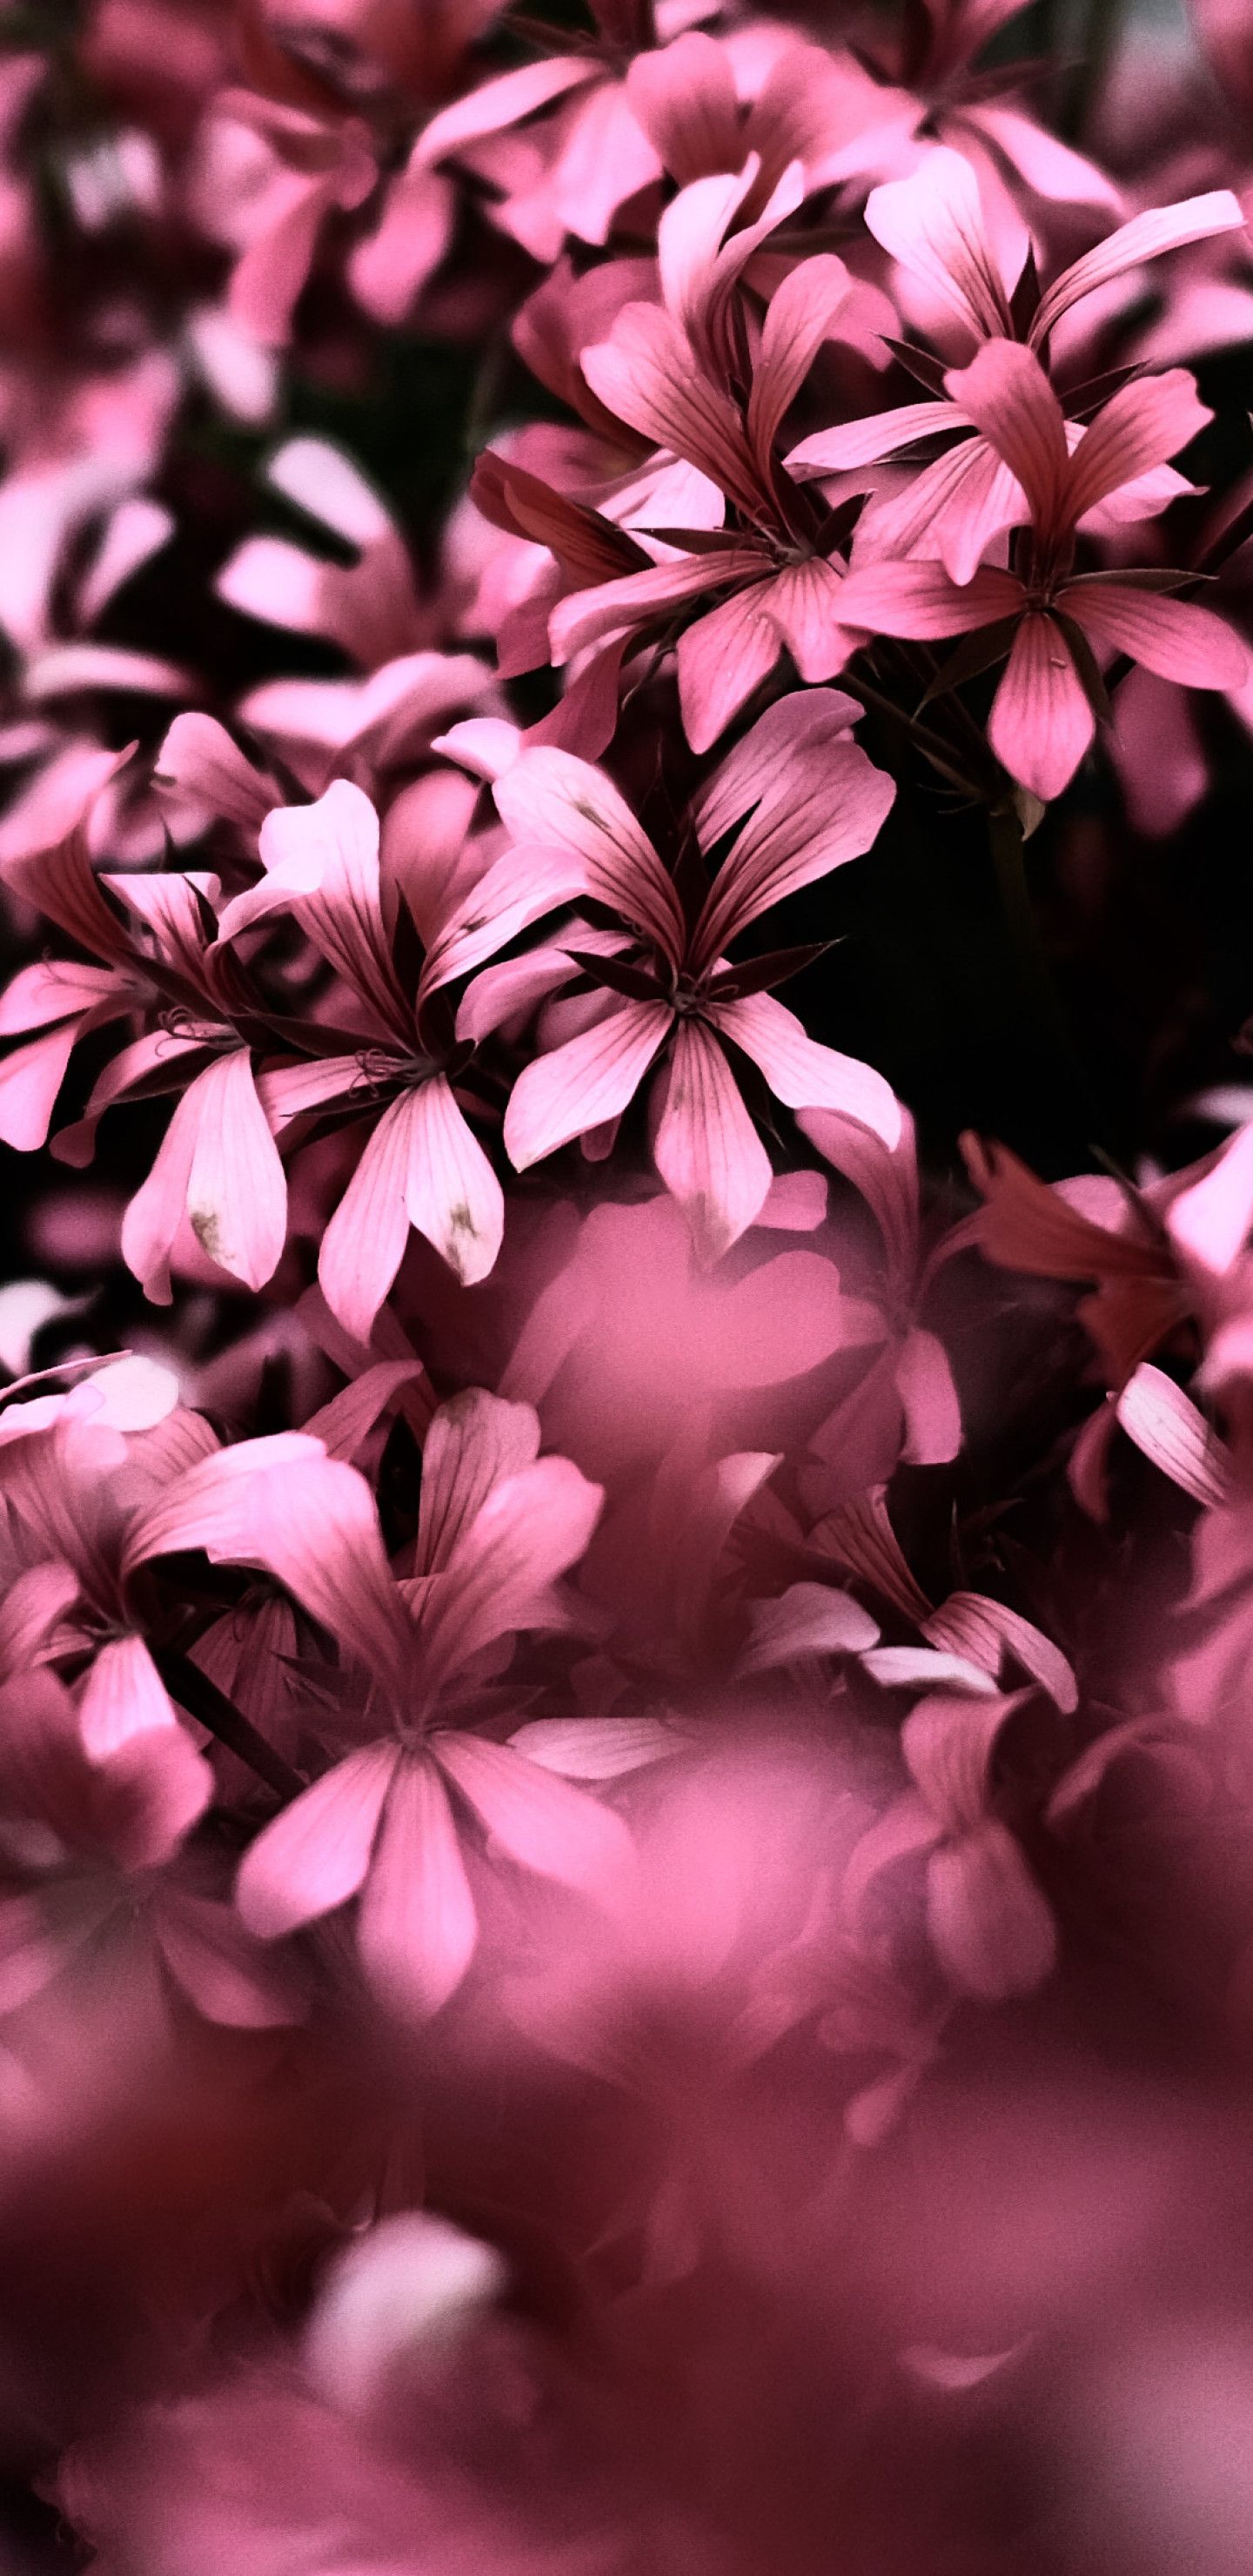 Pink Flowers Ultra HD Blur 4k Samsung Galaxy Note 8